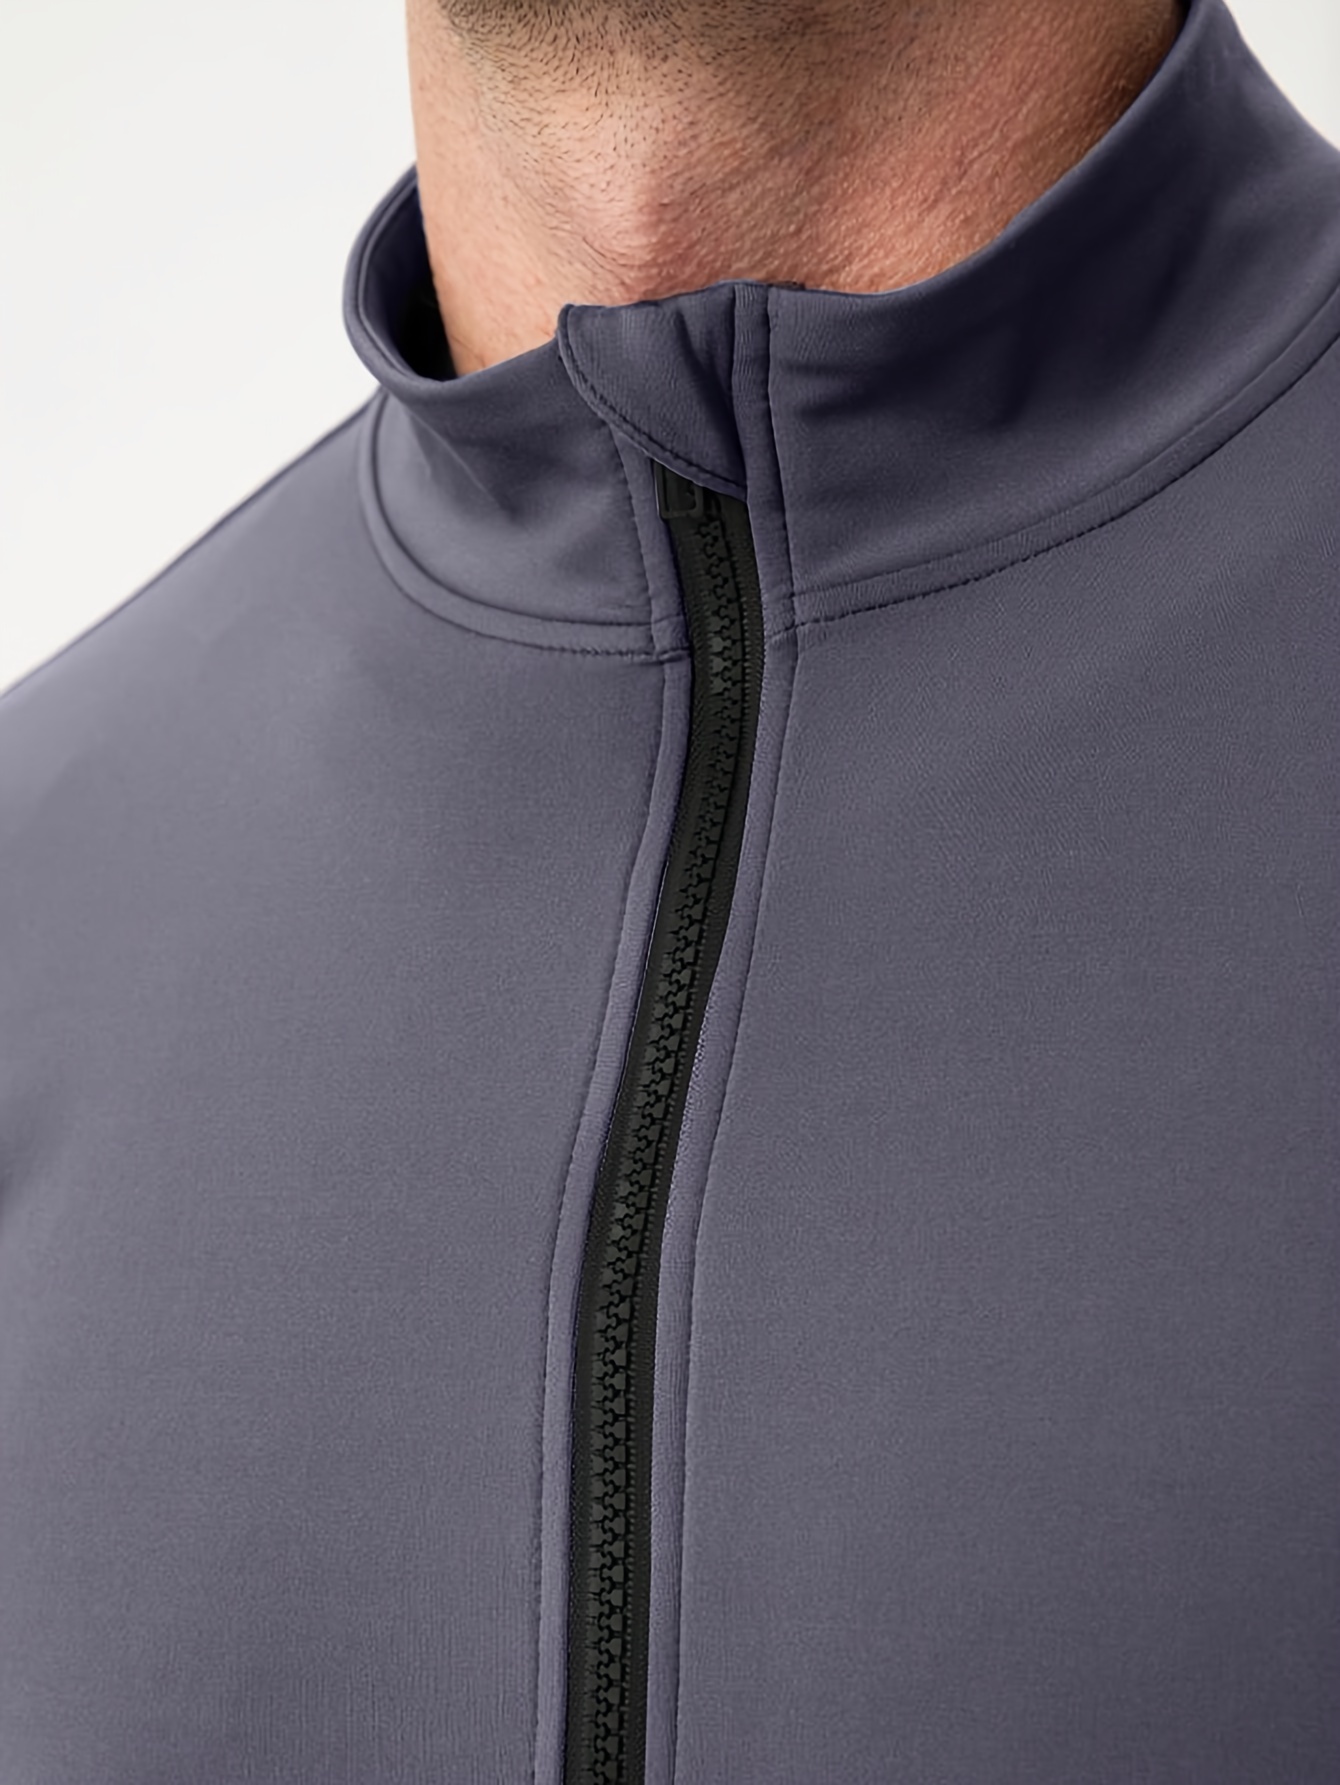 Autumn Winter Zipper Long-Sleeved Sports Jacket Quick-Drying